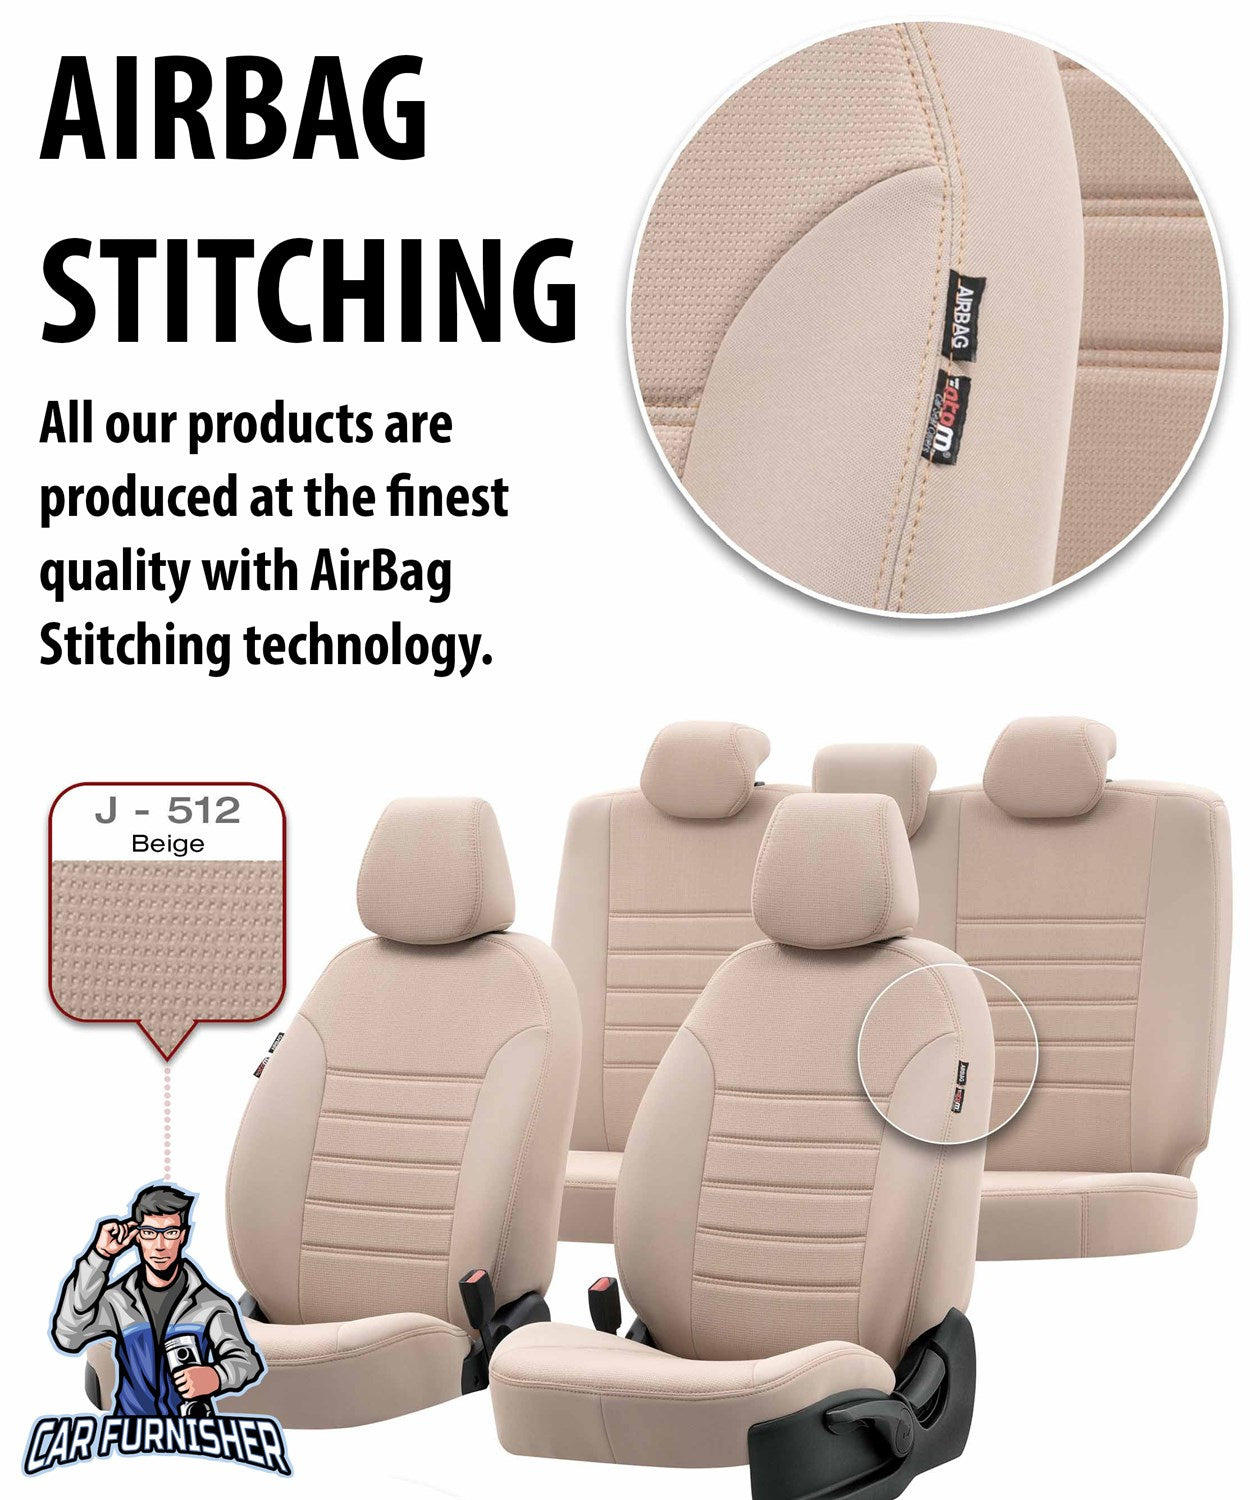 Jeep Compass Seat Covers Original Jacquard Design Gray Jacquard Fabric